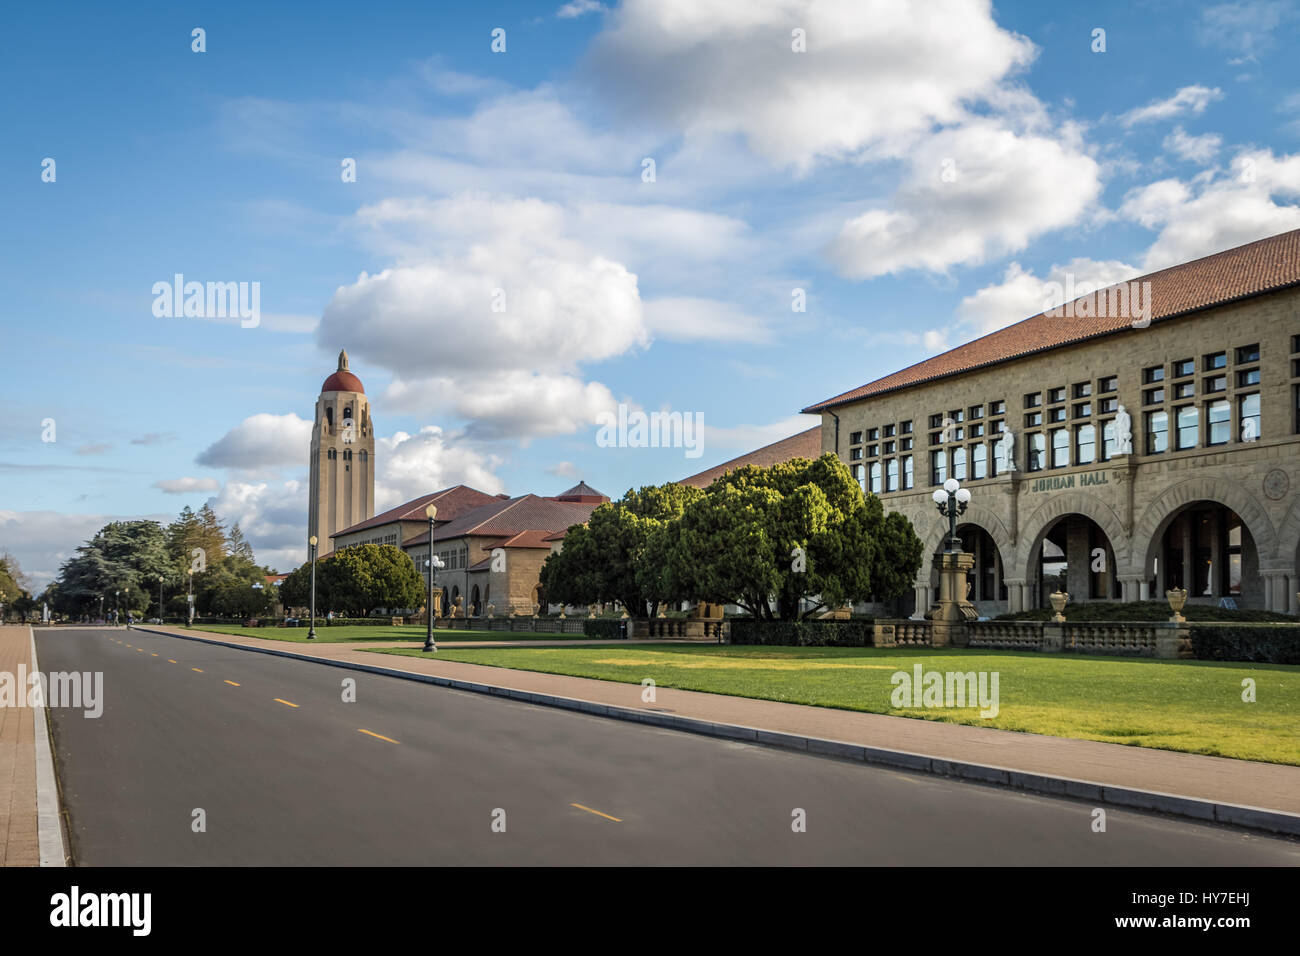 PALO ALTO, USA - January 11, 2017: Stanford University Campus and Hoover Tower - Palo Alto, California, USA Stock Photo